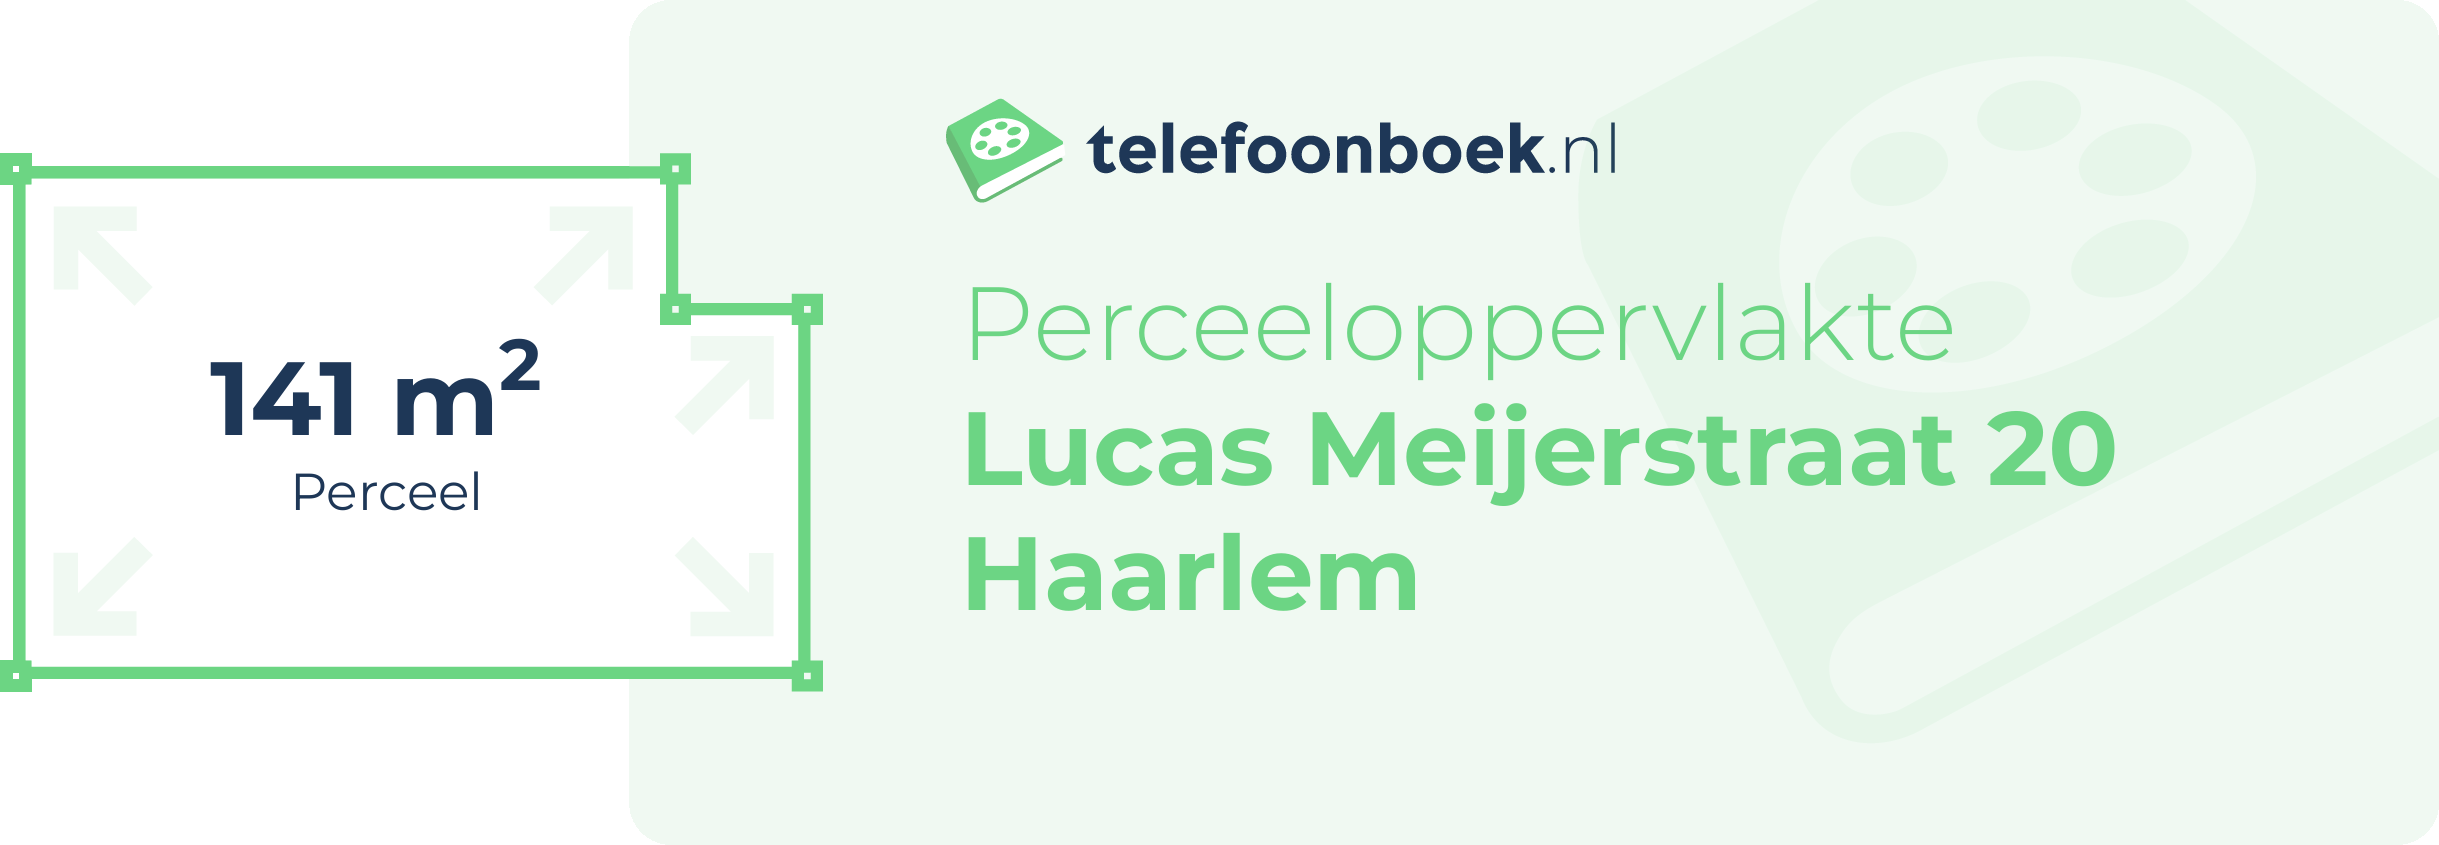 Perceeloppervlakte Lucas Meijerstraat 20 Haarlem